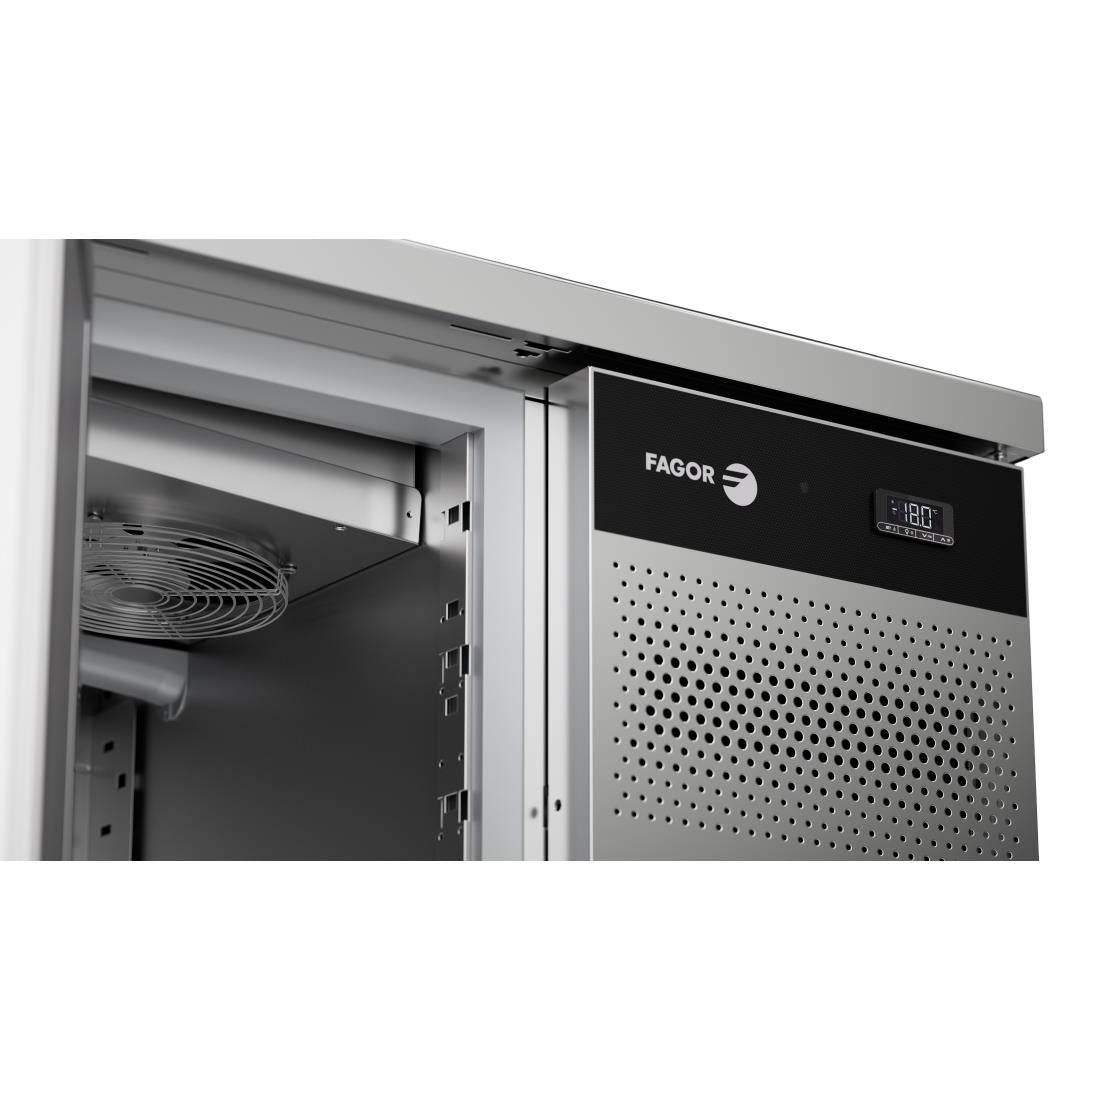 FU024 Fagor Concept 700 Gastronorm Freezer Counter 2 Door CCN-2G JD Catering Equipment Solutions Ltd